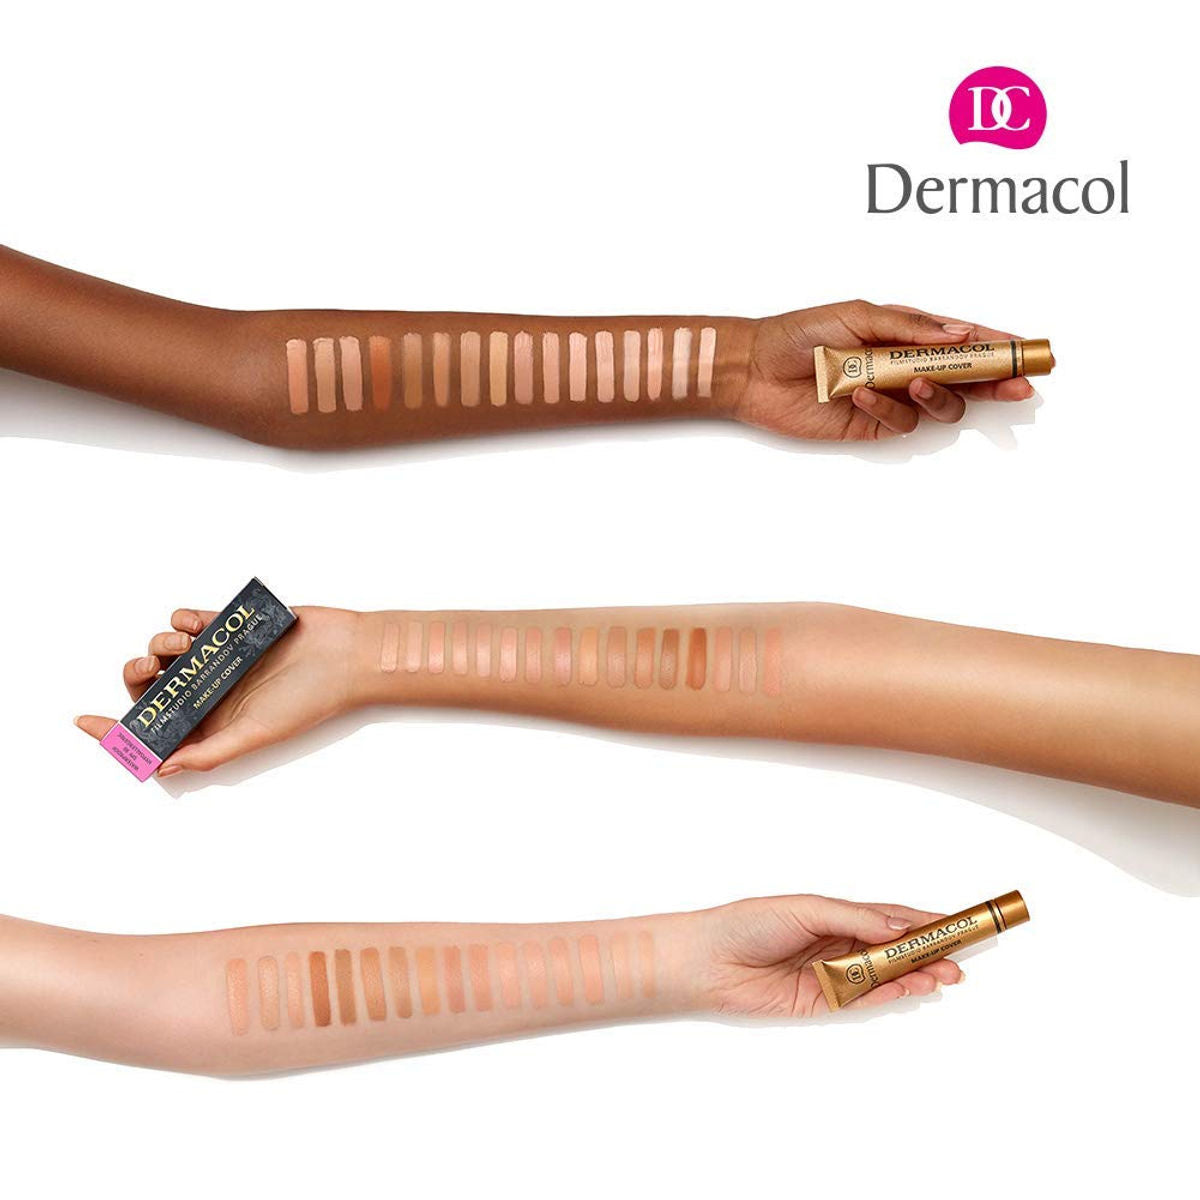 Dermacol Make-Up Cover 215-Medium Beige with Reddish Undertone Dermacol